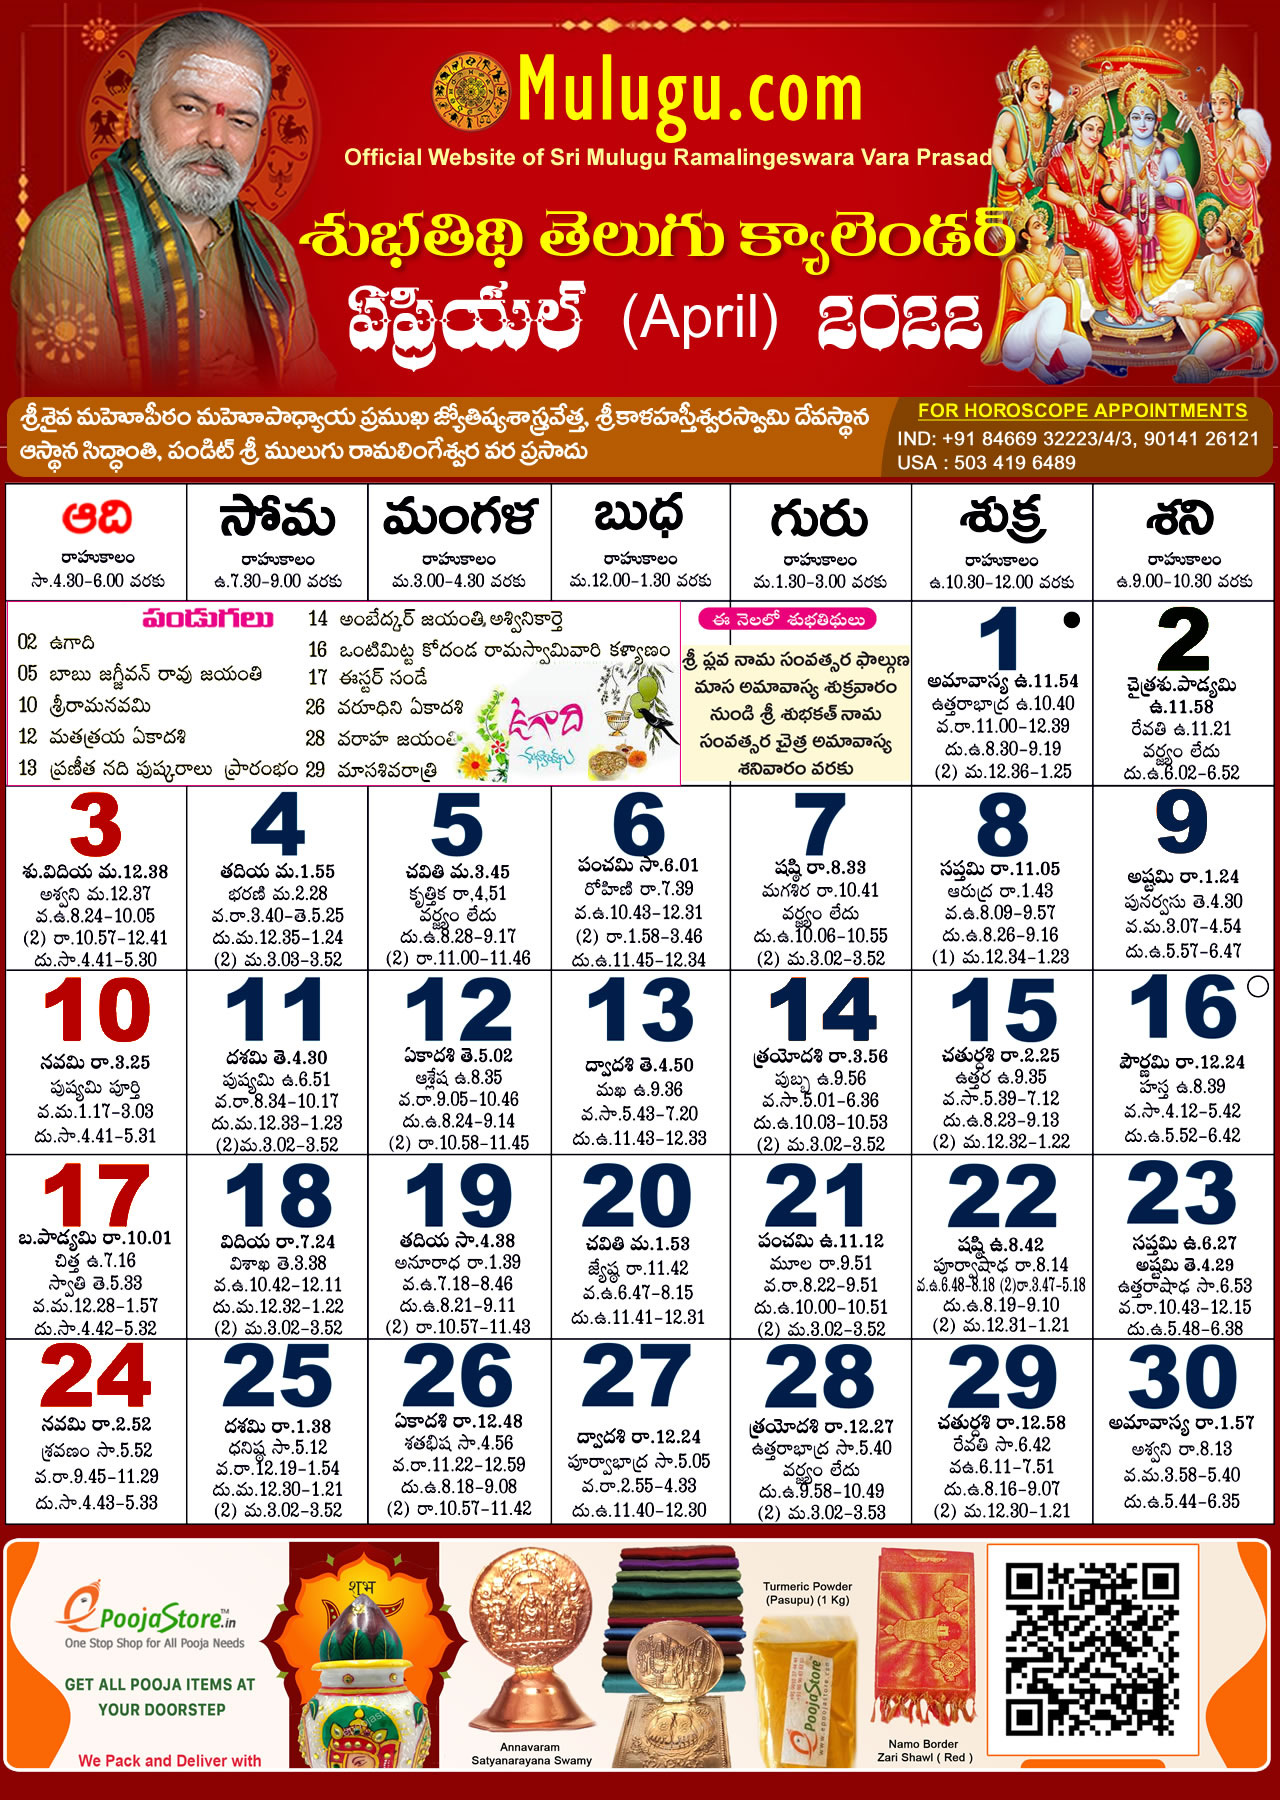 Telugu 2022 Calendar Subhathidi April Telugu Calendar 2022 | Telugu Calendar 2022 - 2023 | Telugu  Subhathidi Calendar 2022 | Calendar 2022 | Telugu Calendar 2022 |  Subhathidi Calendar 2022 | Chicago Calendar 2022 |